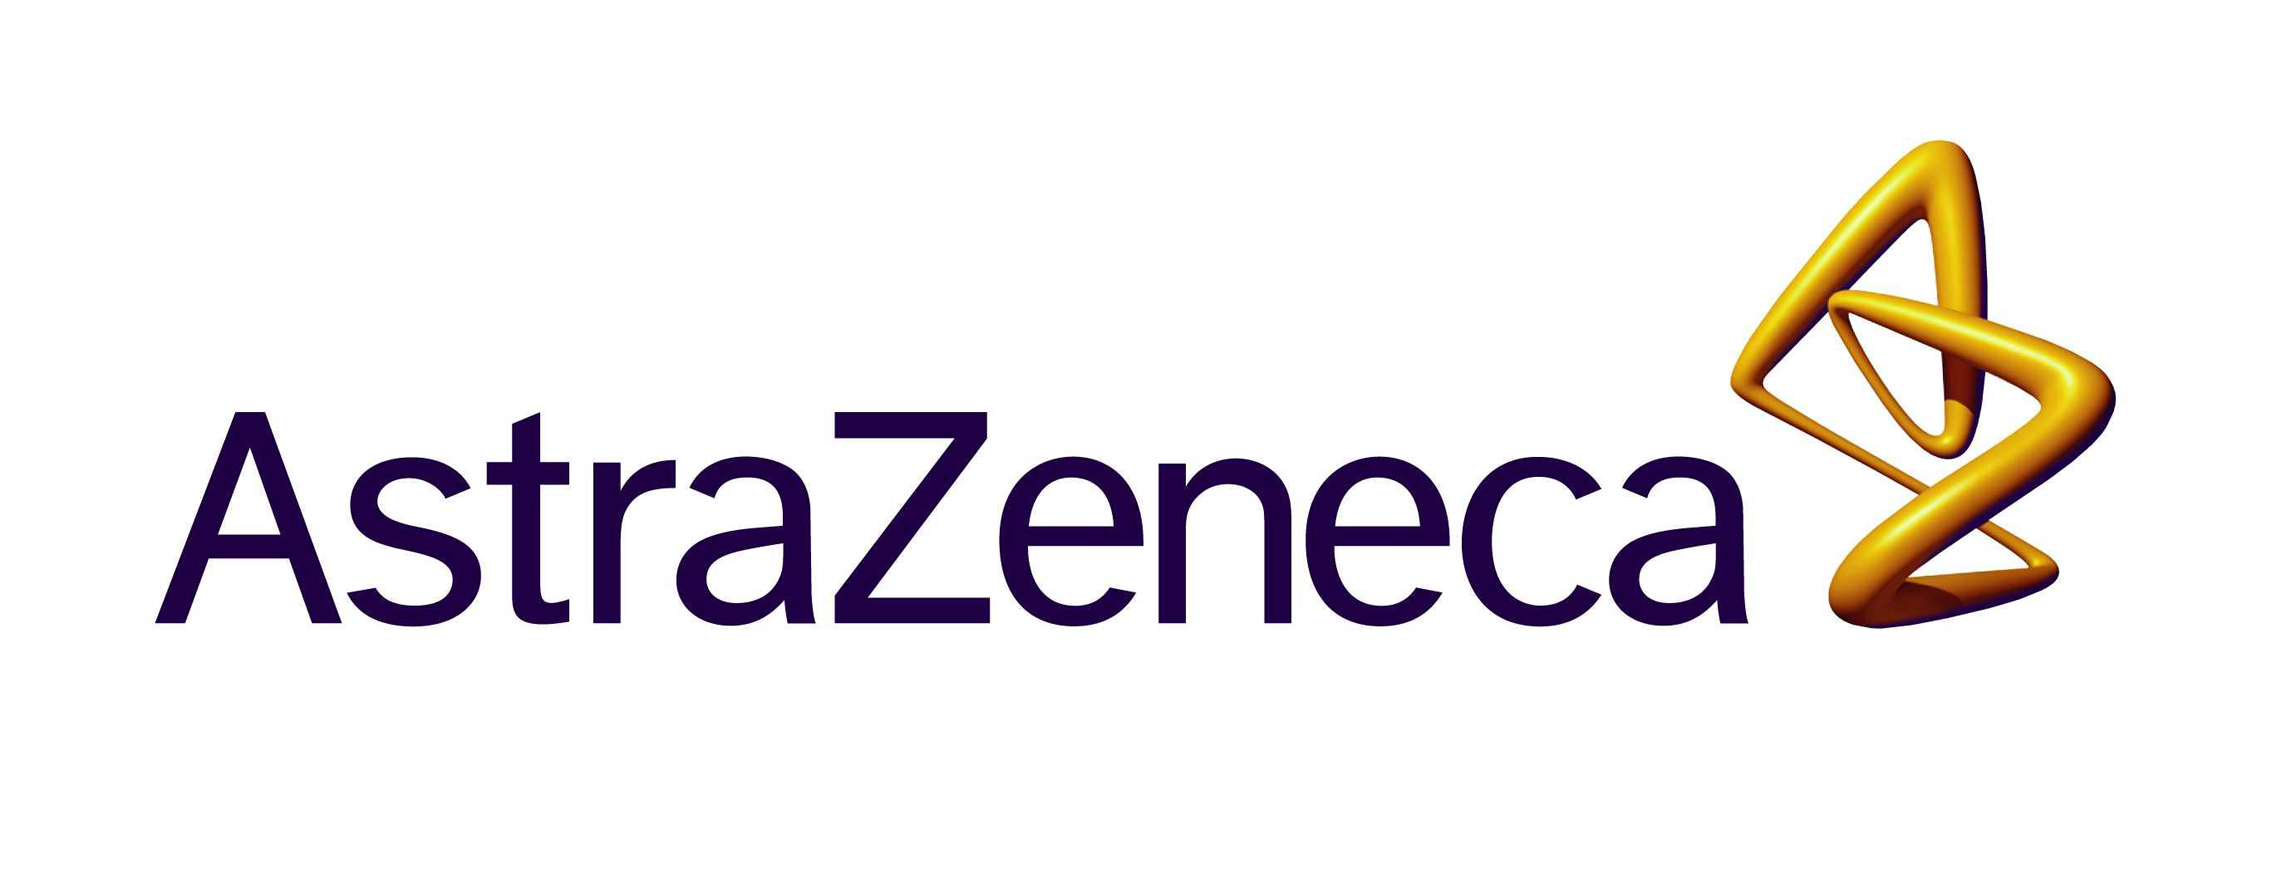 Astrazeneca Logo - Astrazeneca, Transparent background PNG HD thumbnail